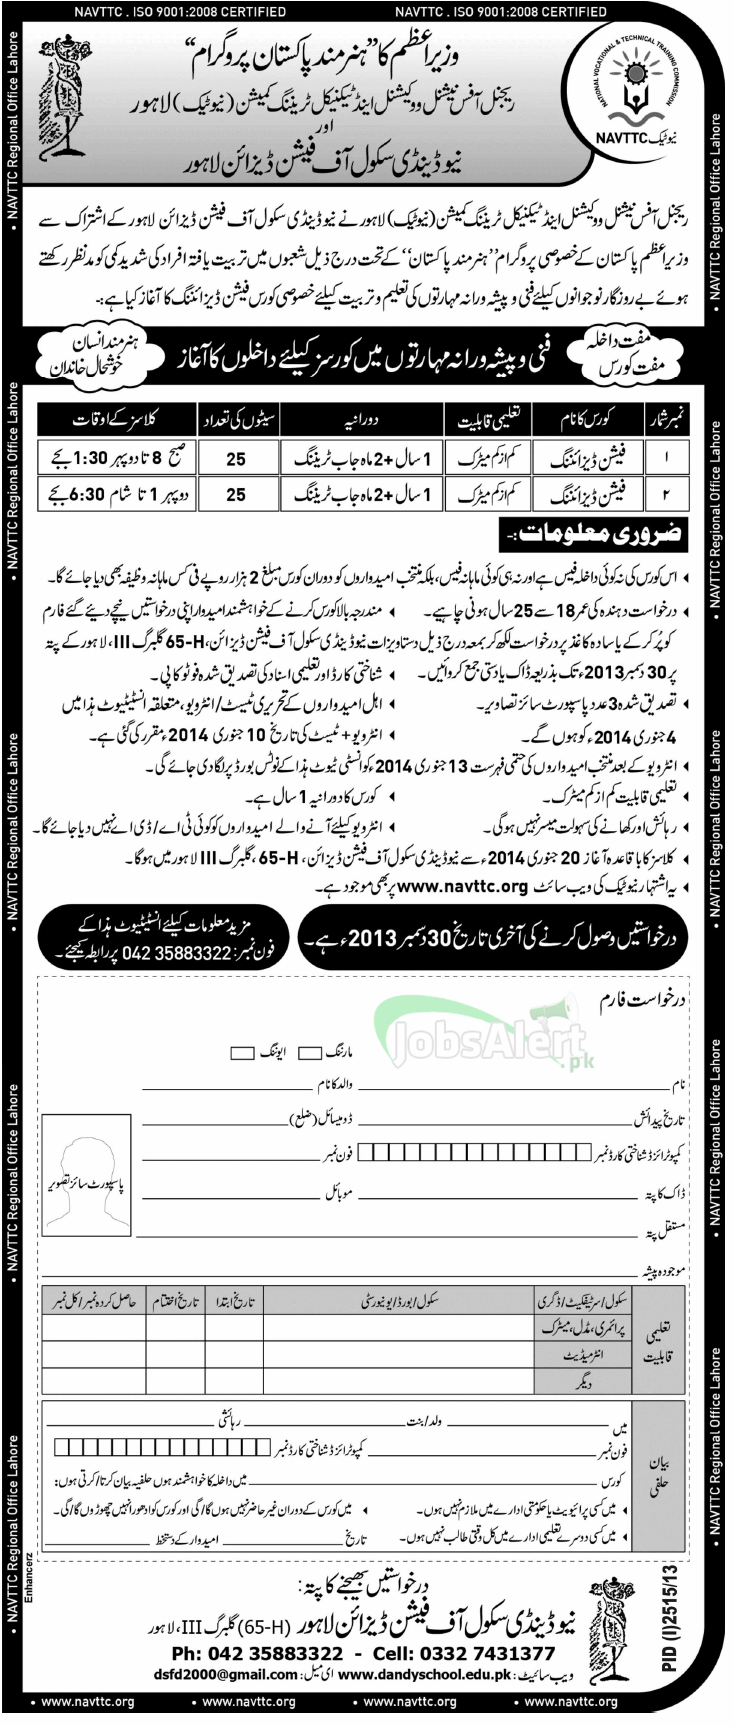 PM Nawaz Sharif Youth Skill Development Scheme Application Form Download